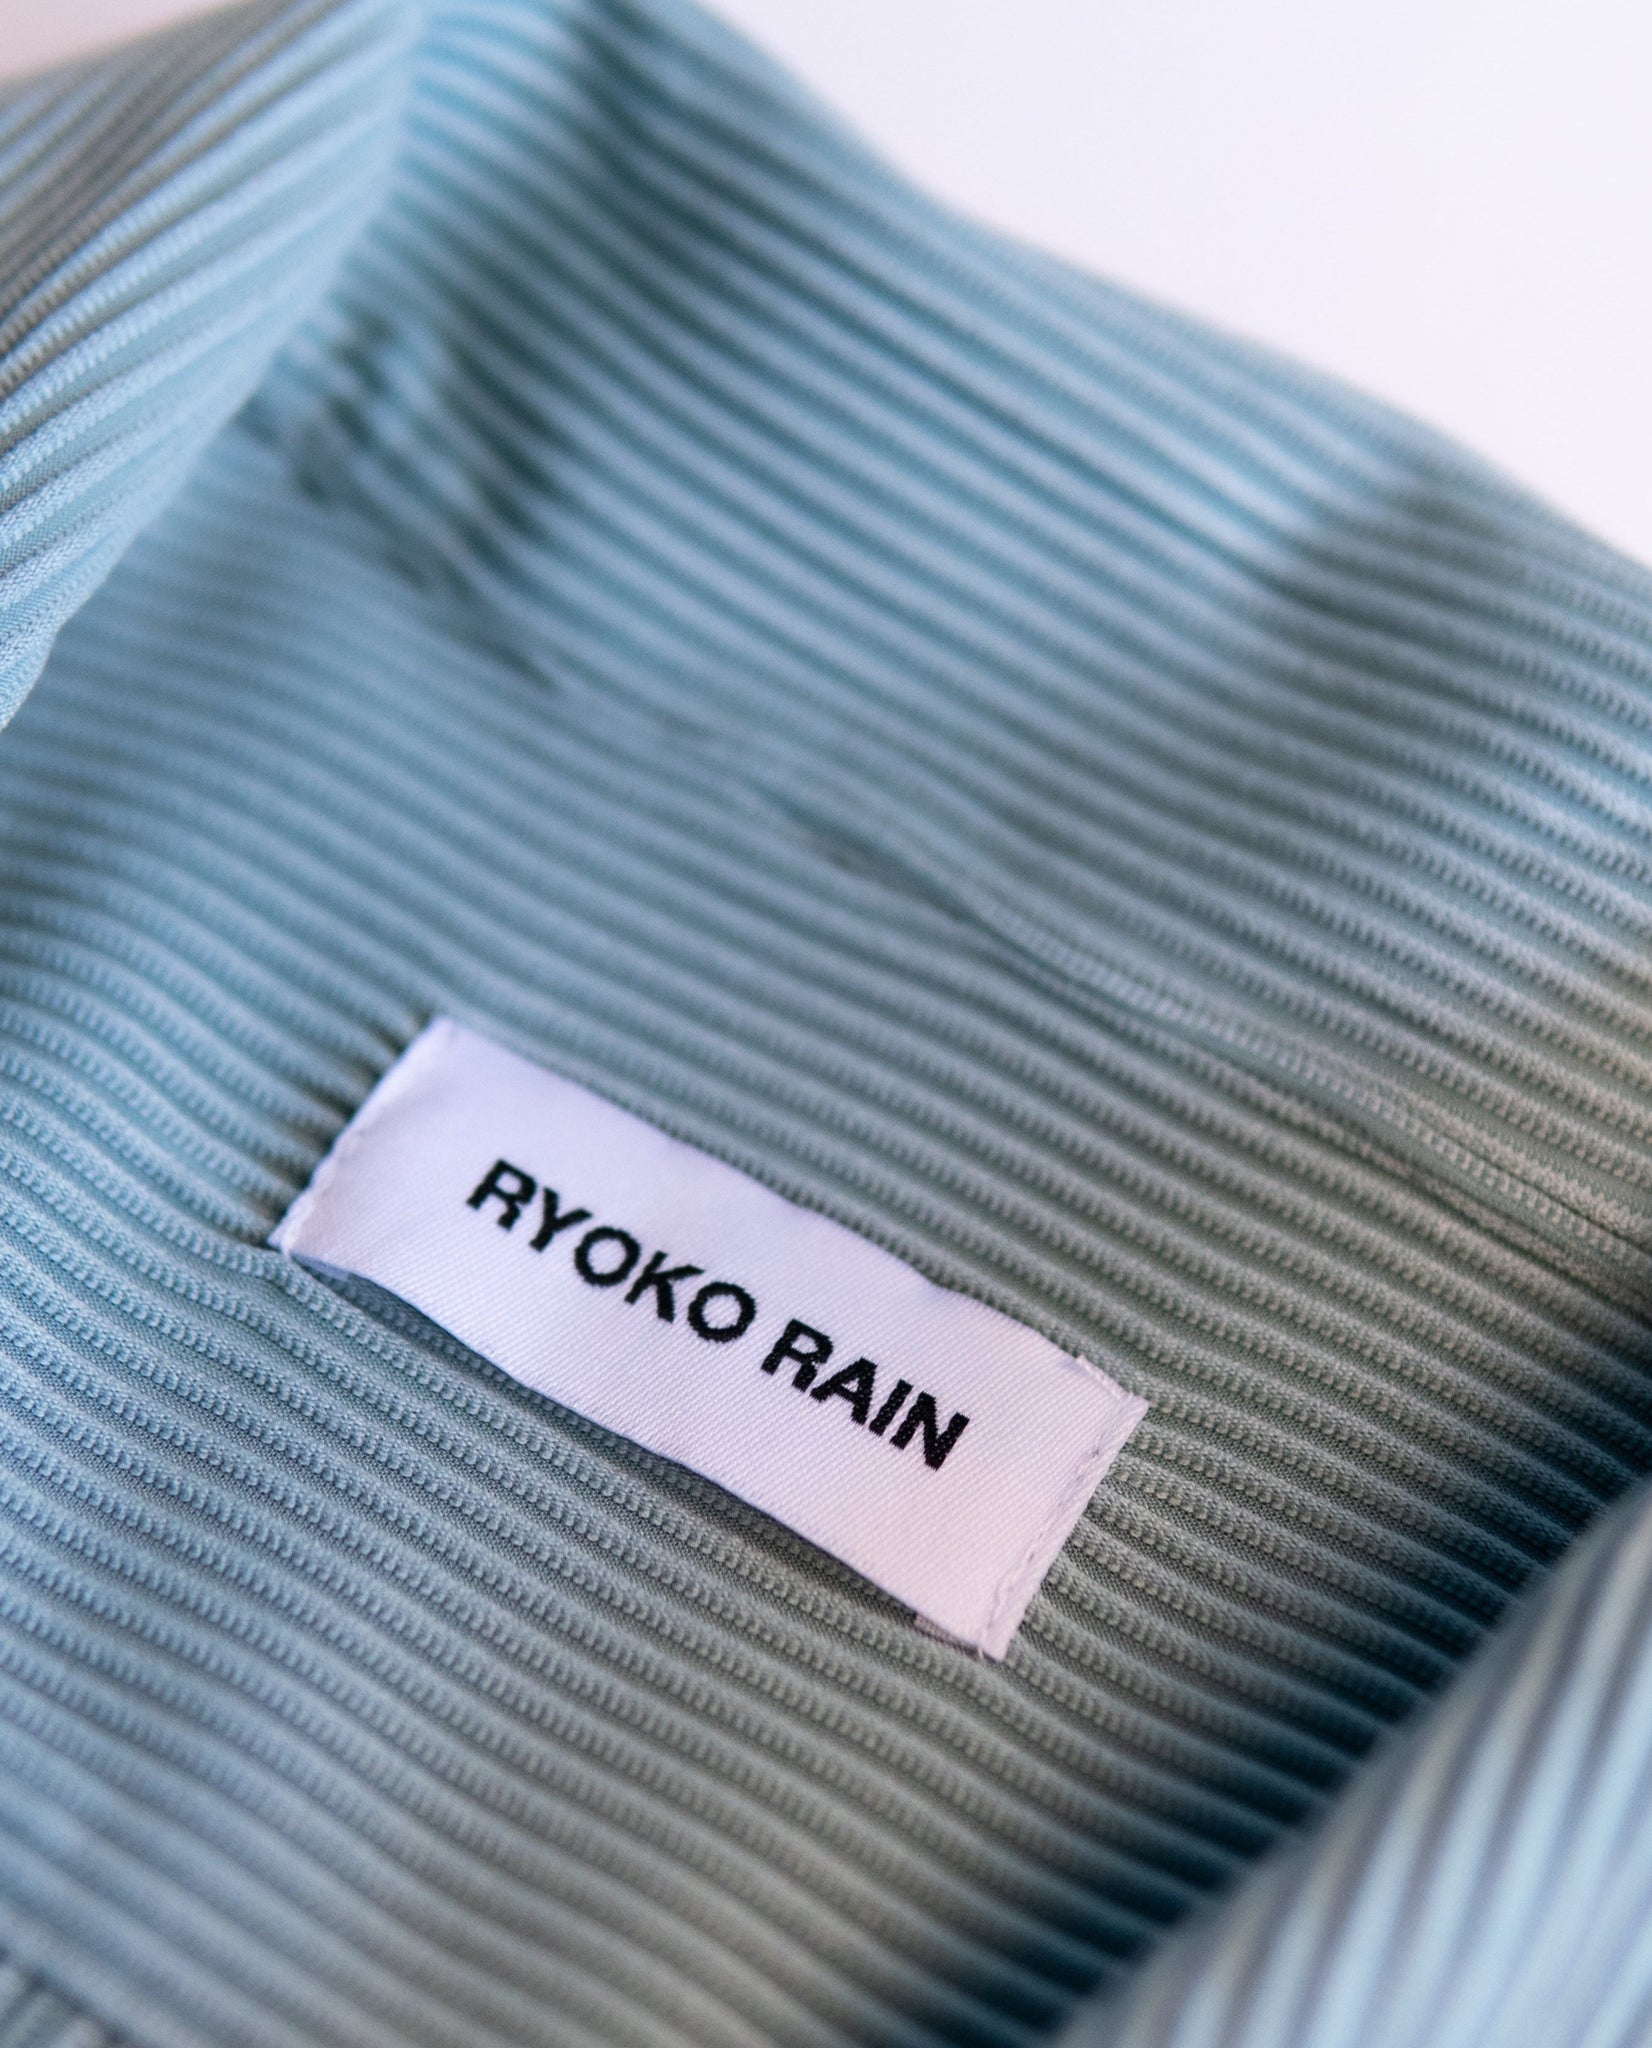 Ryoko Rain Ice pleated button-up shirt. Close-up photo of collar details with Ryoko Rain clothing tag